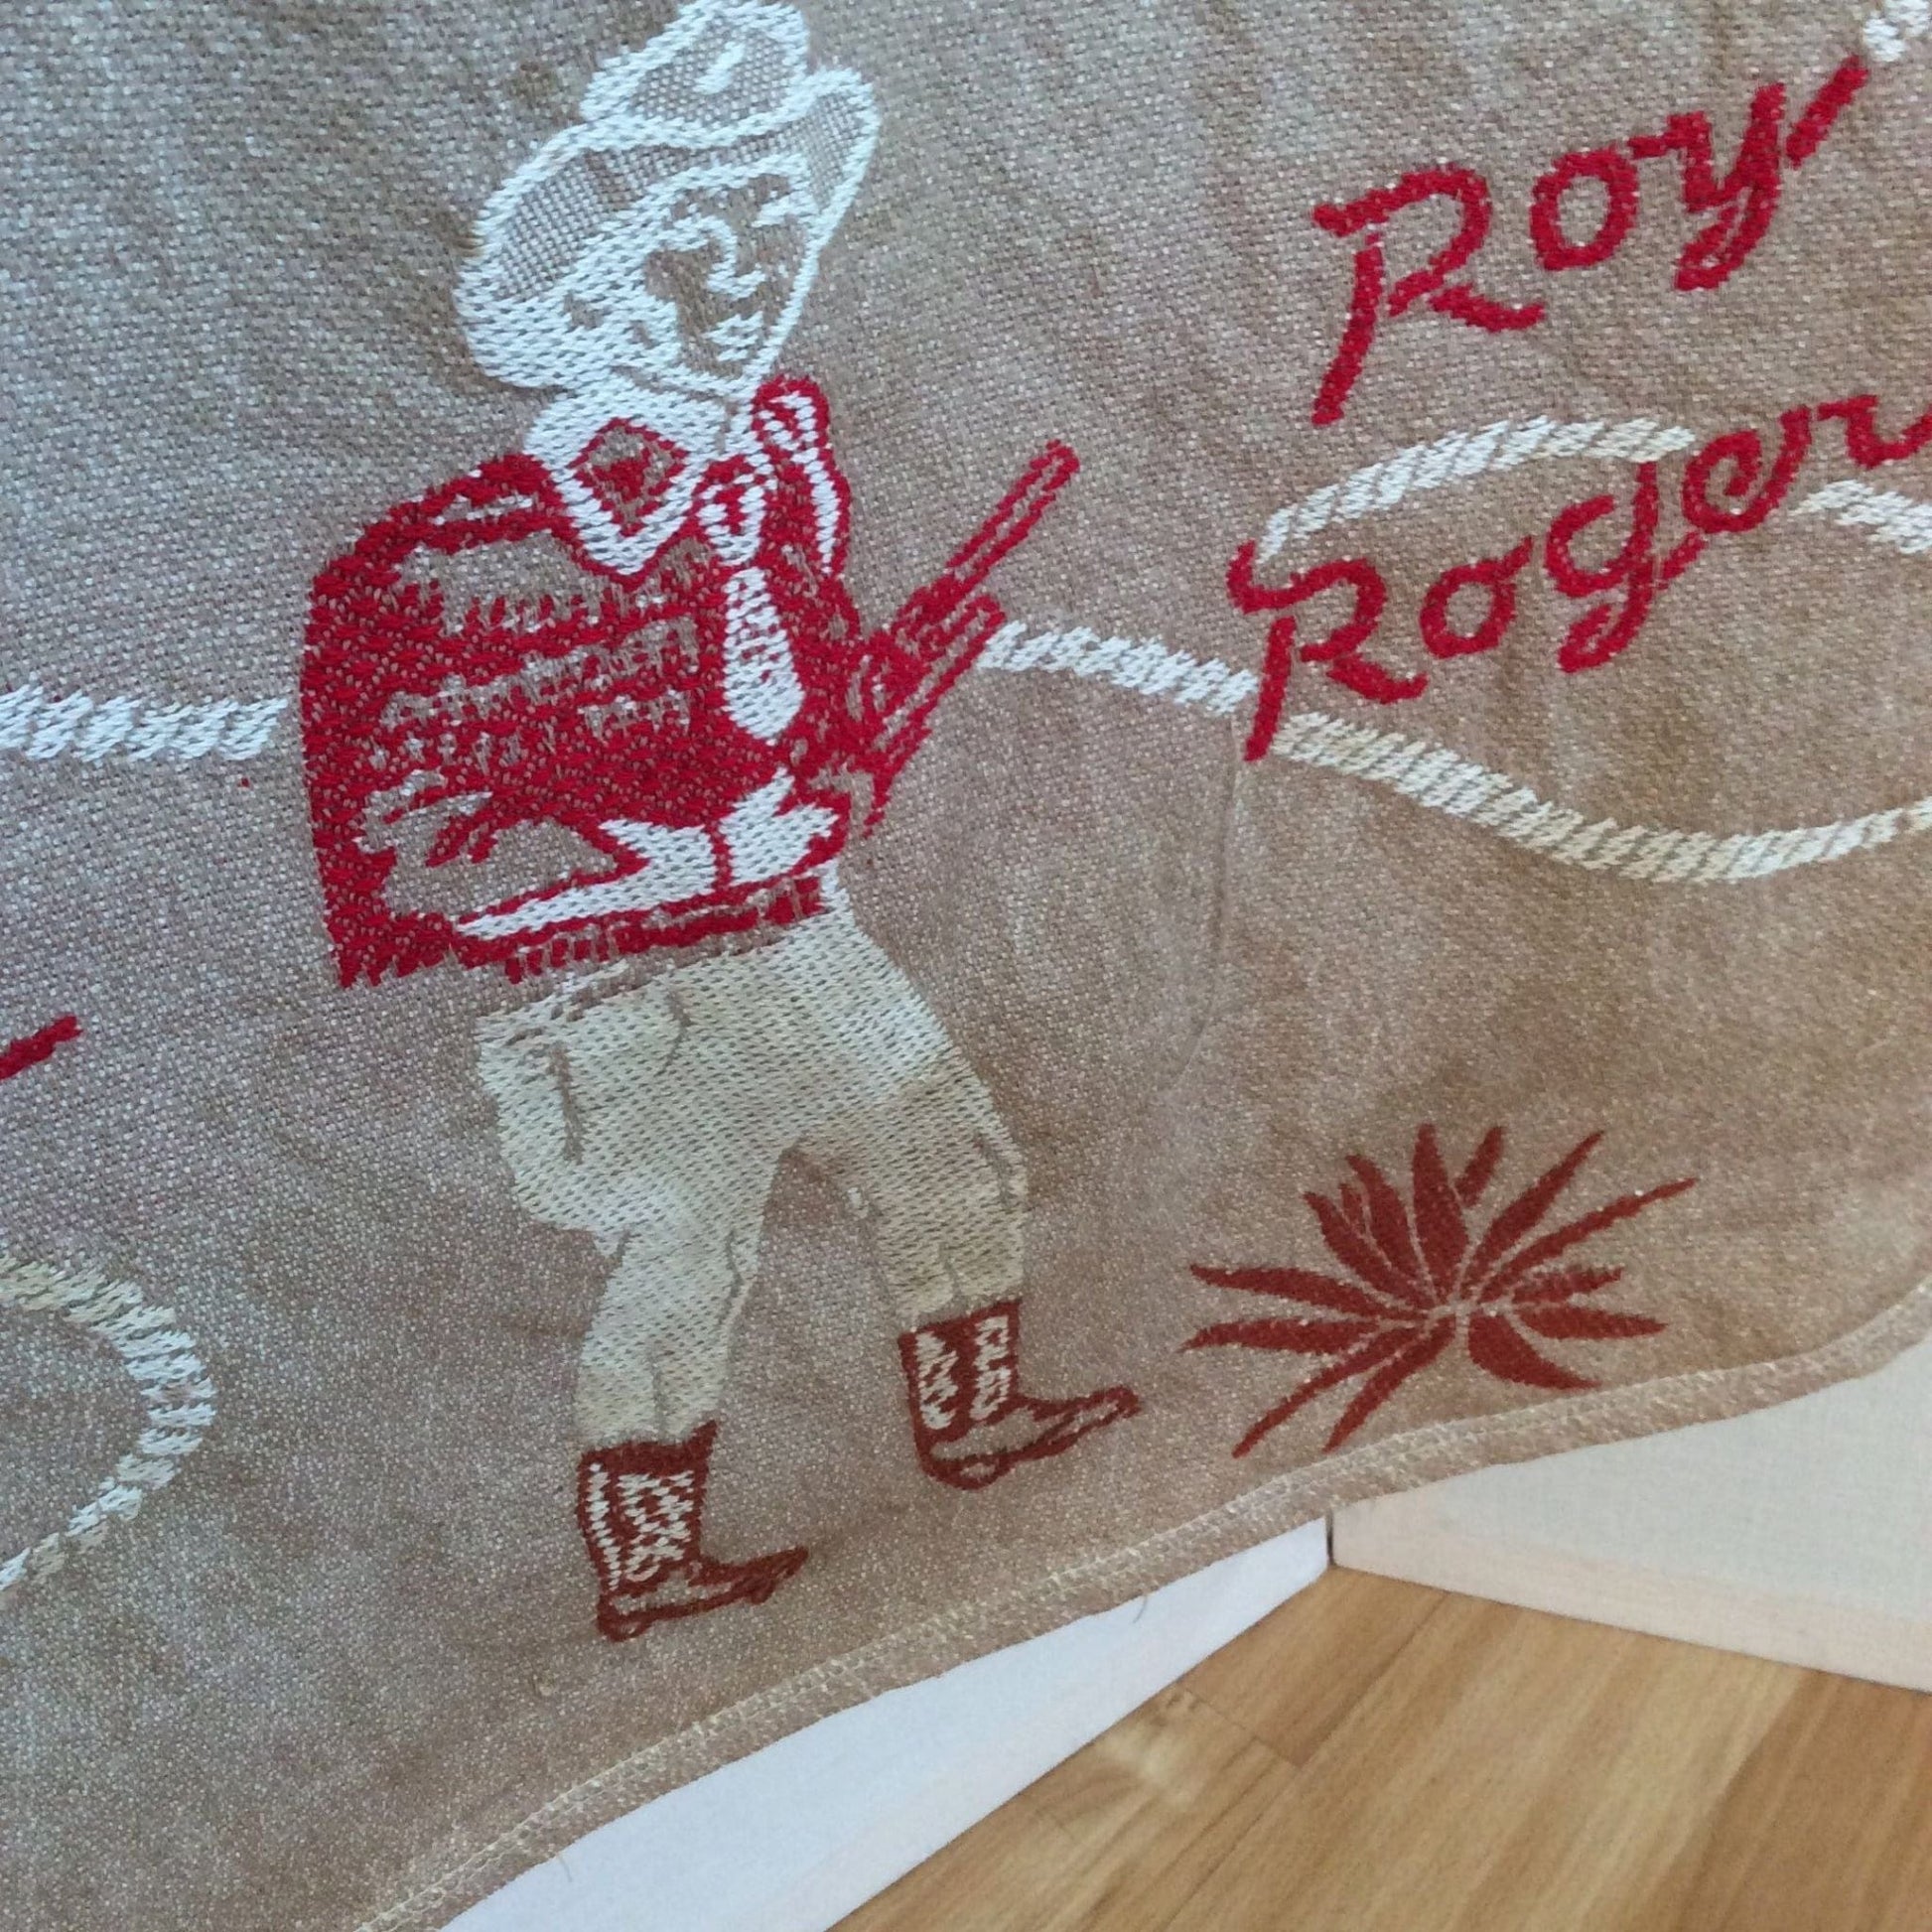 Roy Rogers Bedspread Multi / Cotton / Vintage 1950s